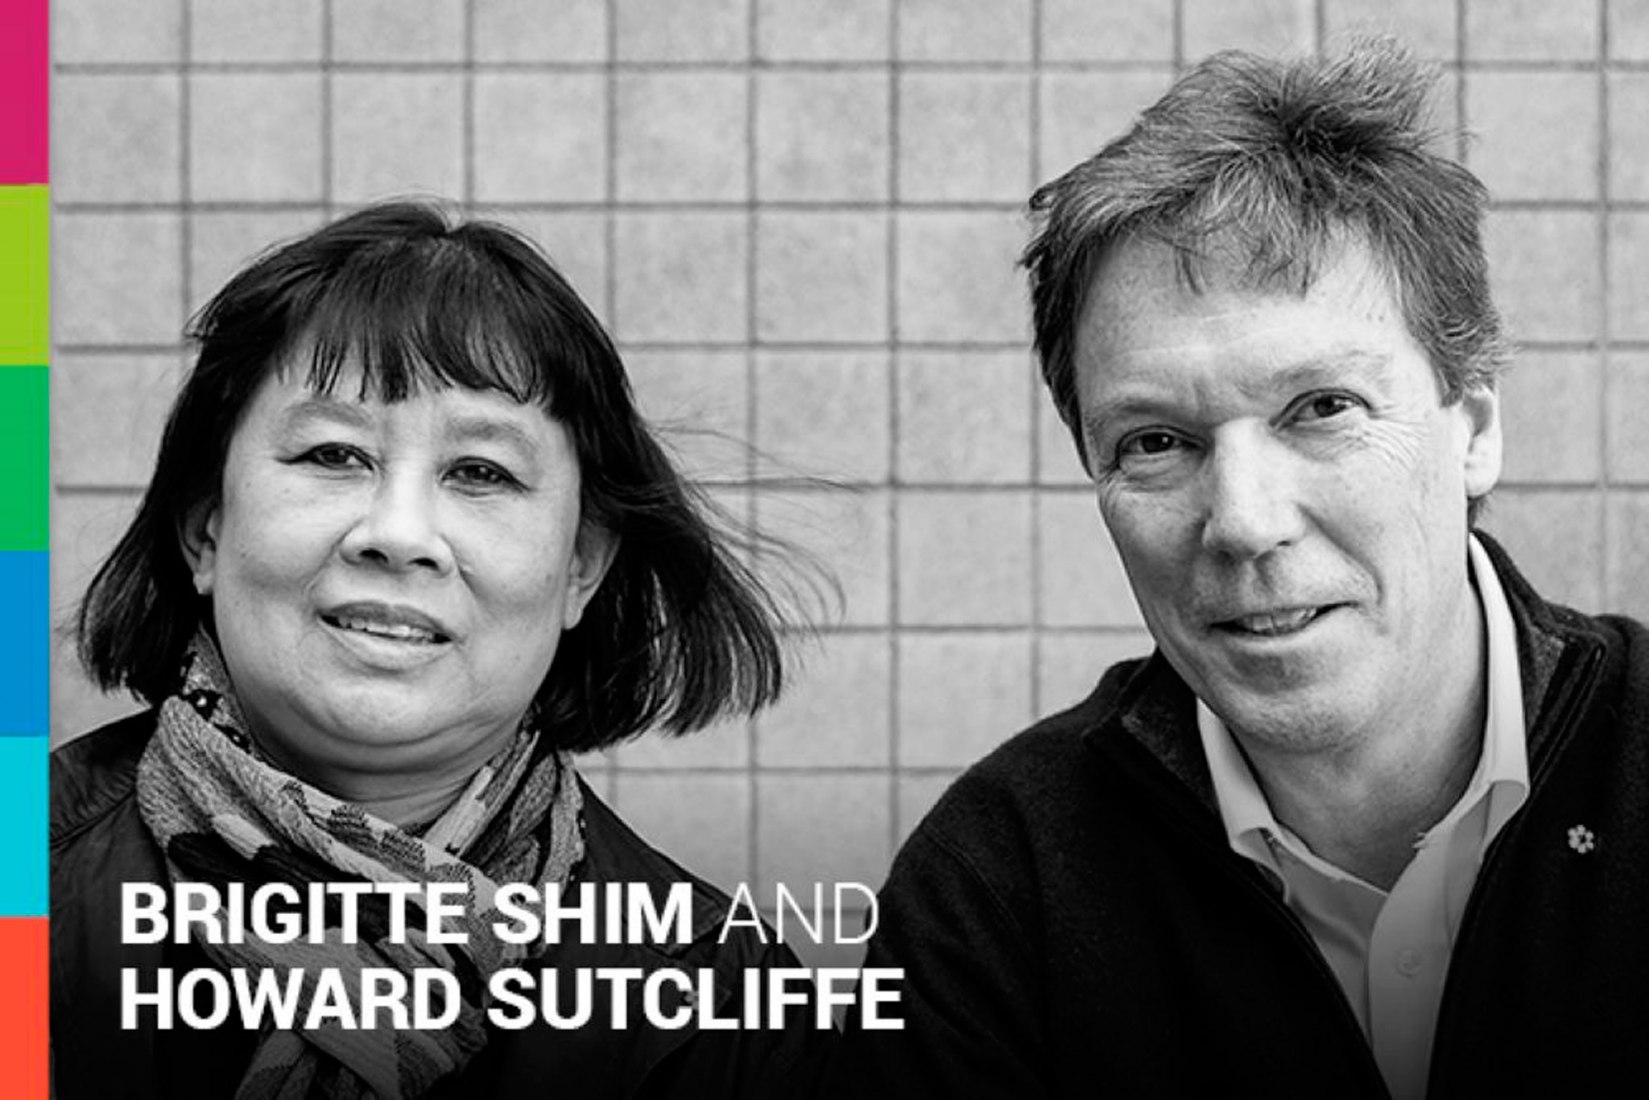 Brigitte Shim and A. Howard Sutcliffe